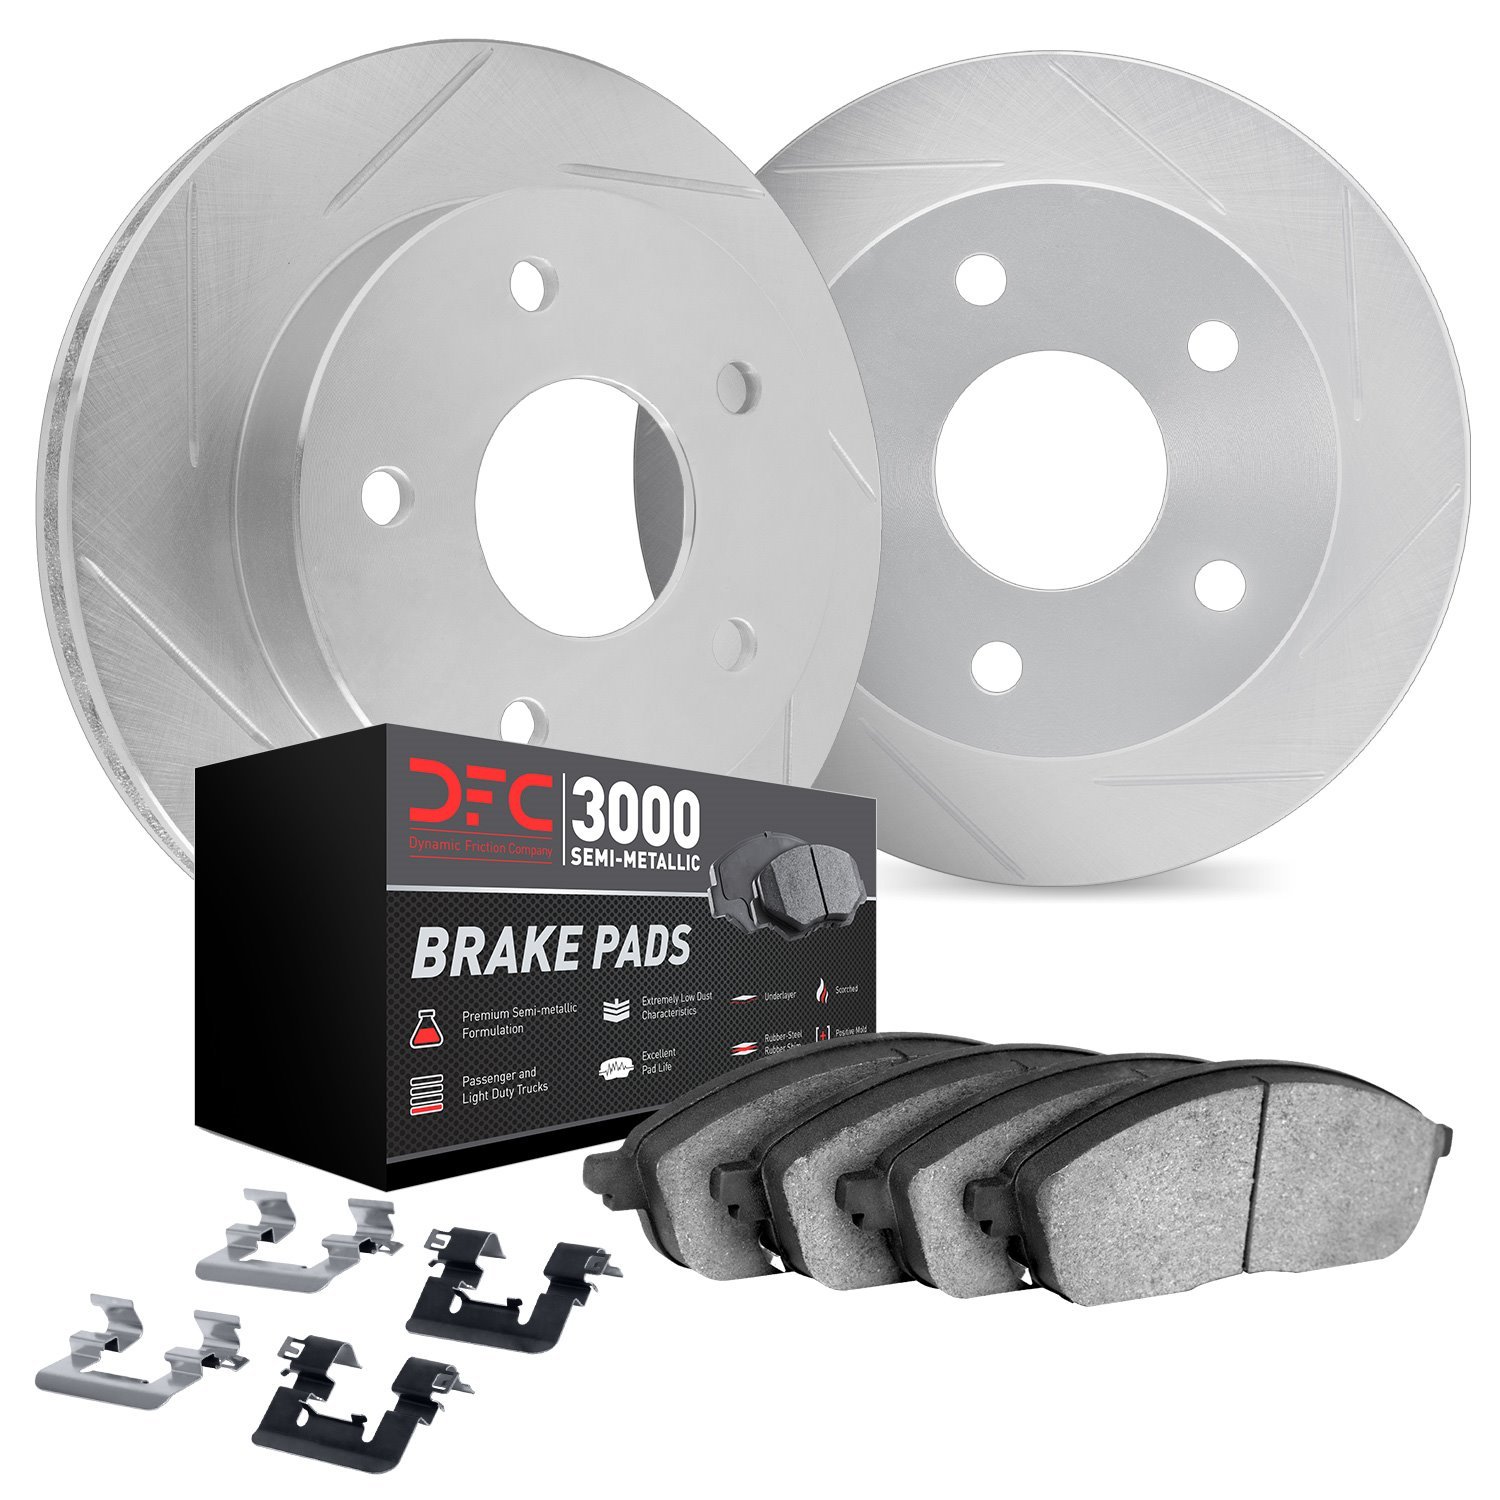 5112-42050 Slotted Brake Rotors with 3000-Series Semi-Metallic Brake Pads Kit & Hardware [Silver], Fits Select Mopar, Position: